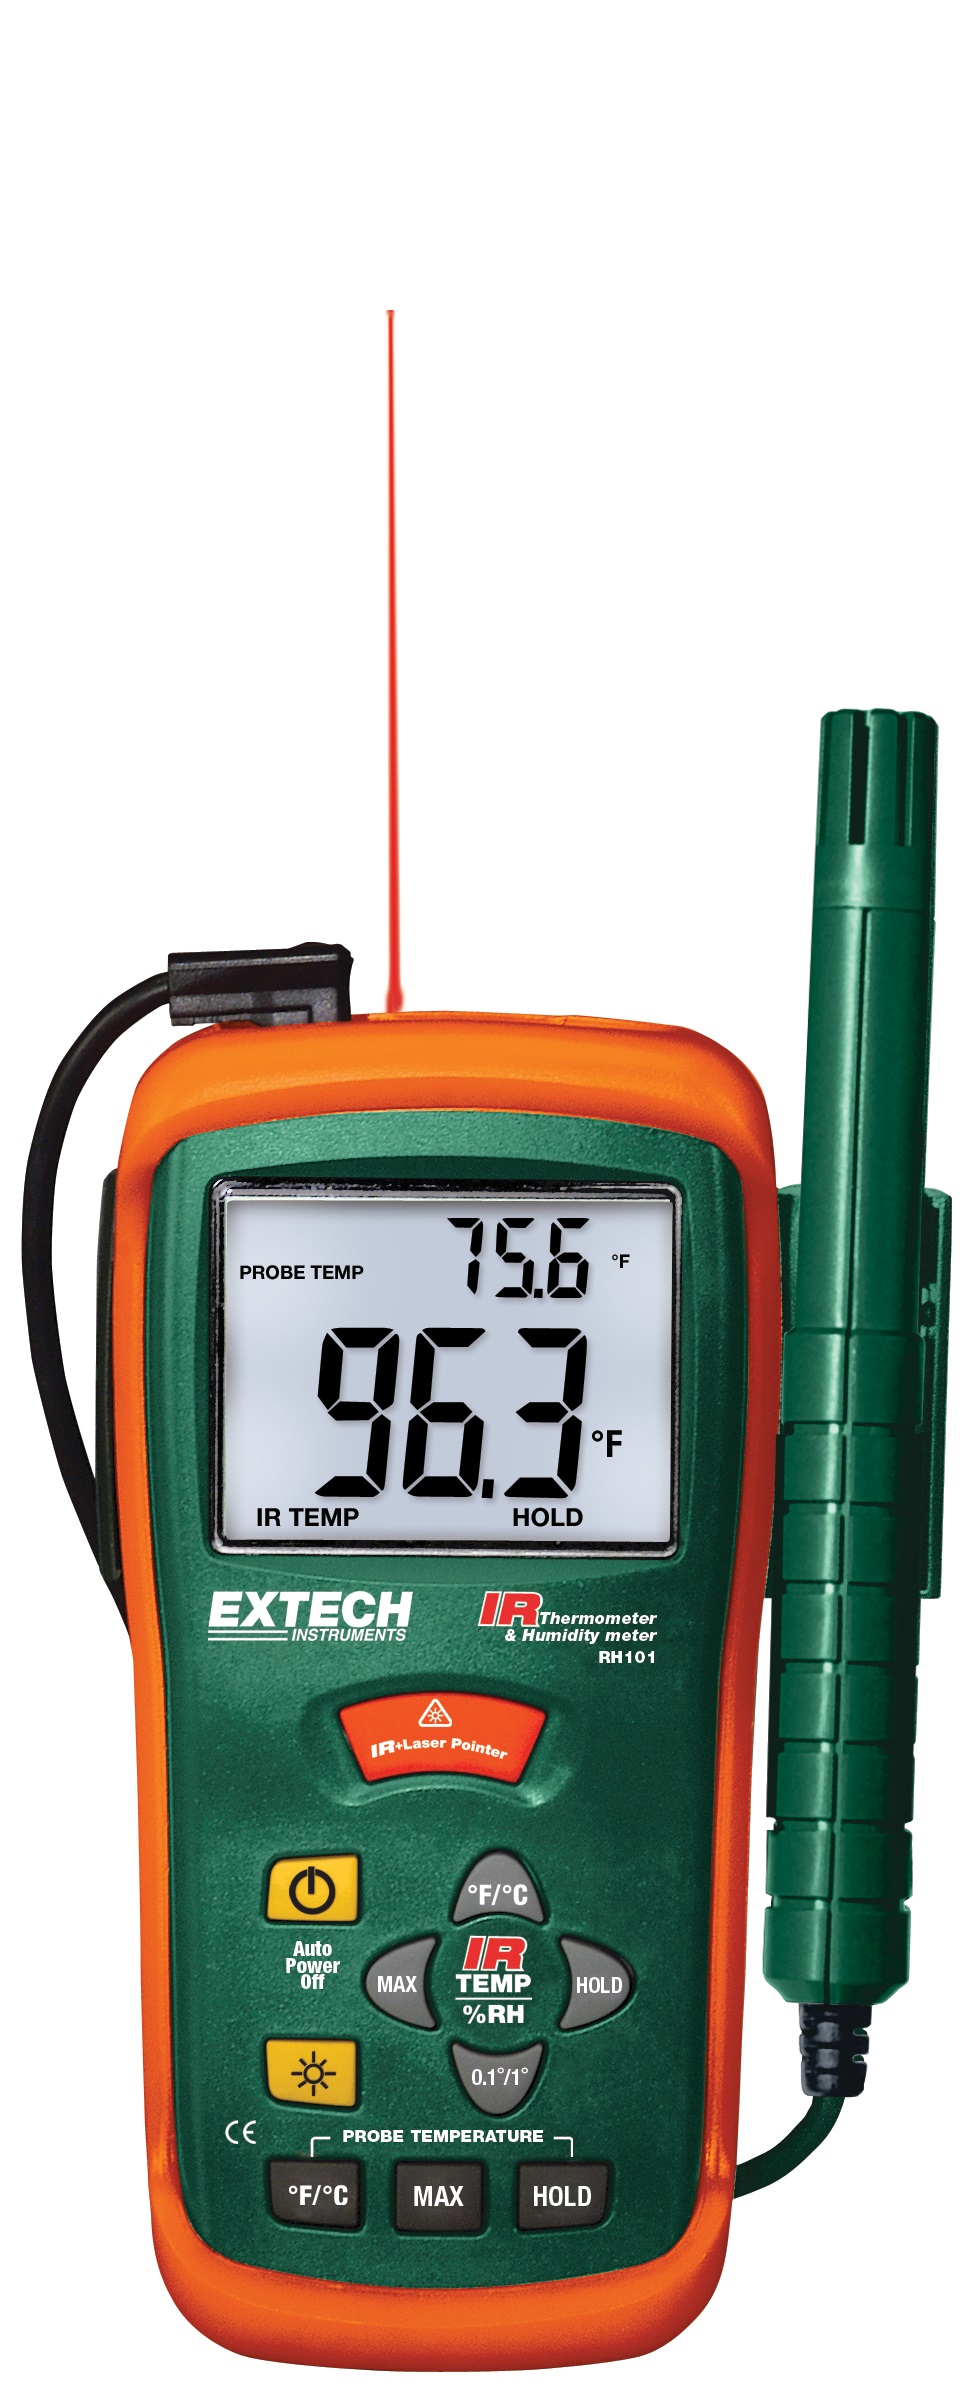  Extech  RH101 Hygro Thermometer  IR Thermometer 